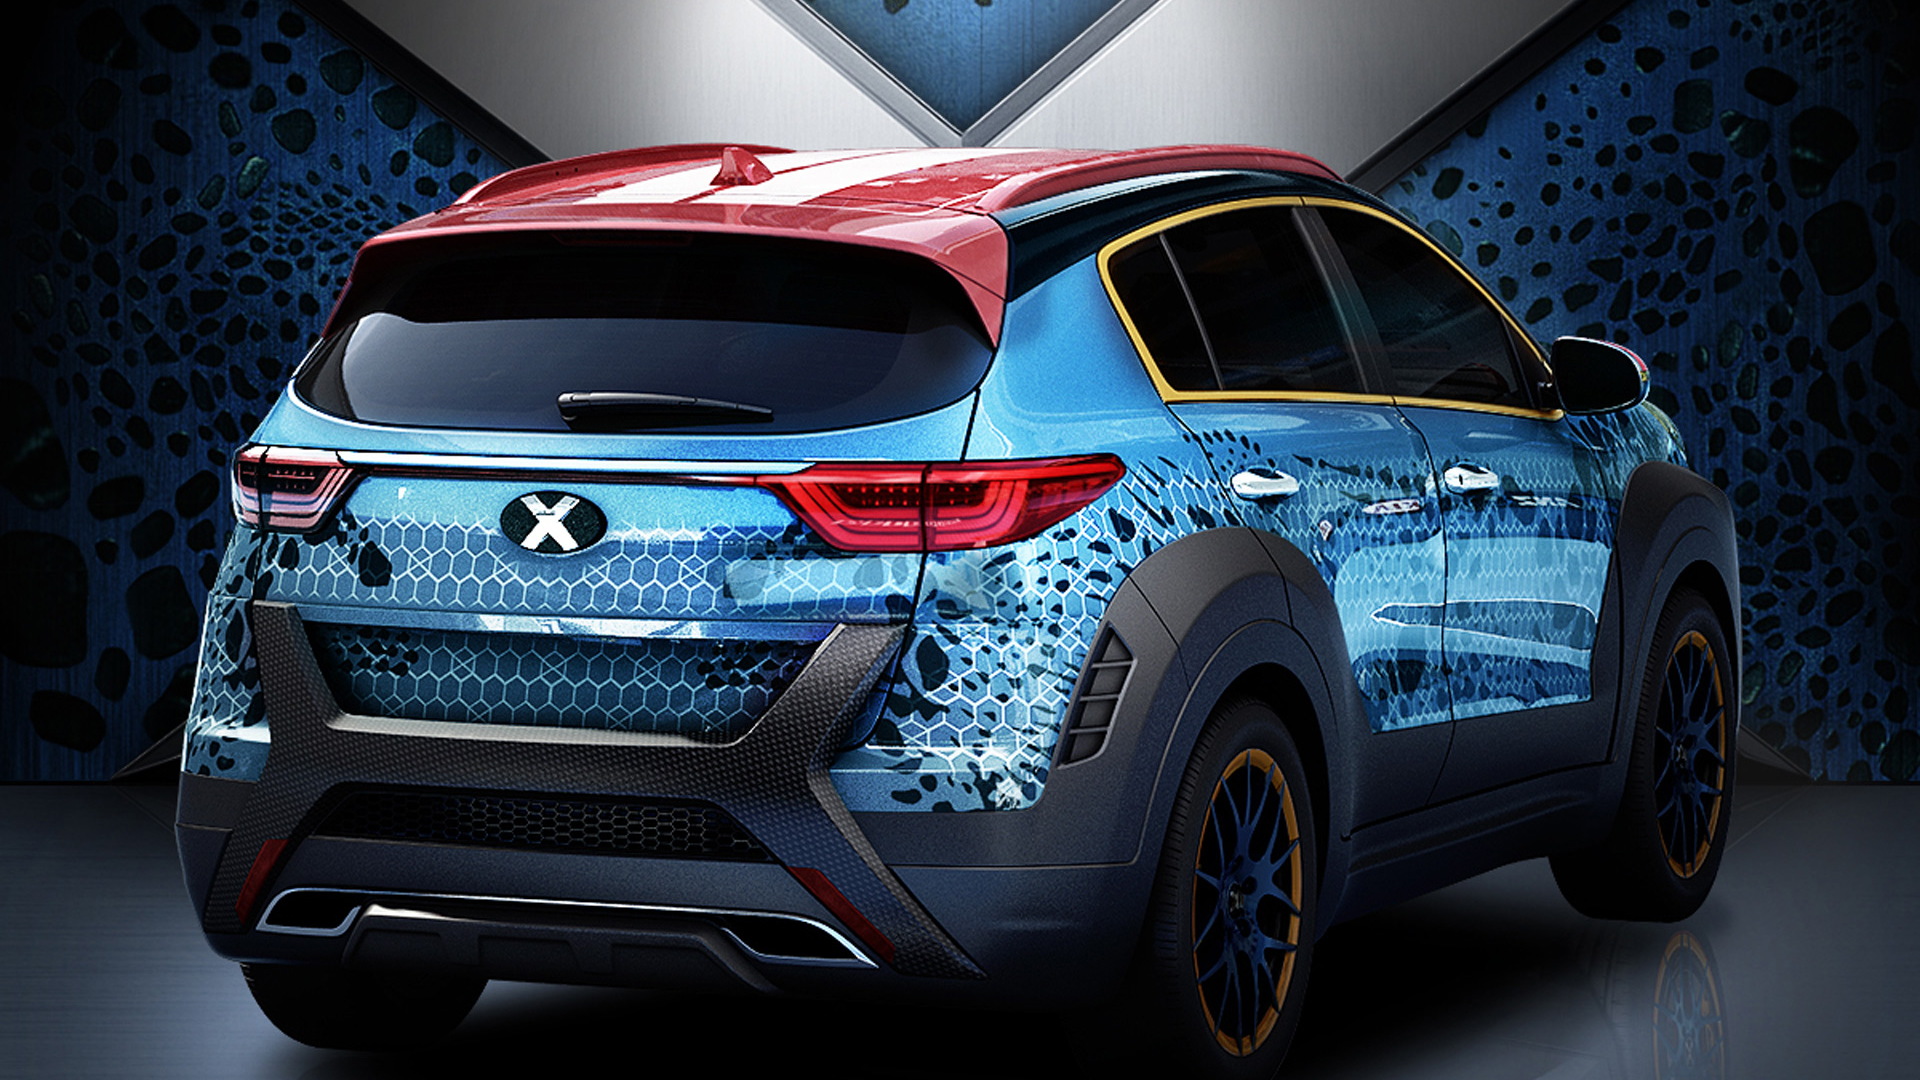 2017 Kia Sportage inspired by ‘X-Men: Apocalypse’